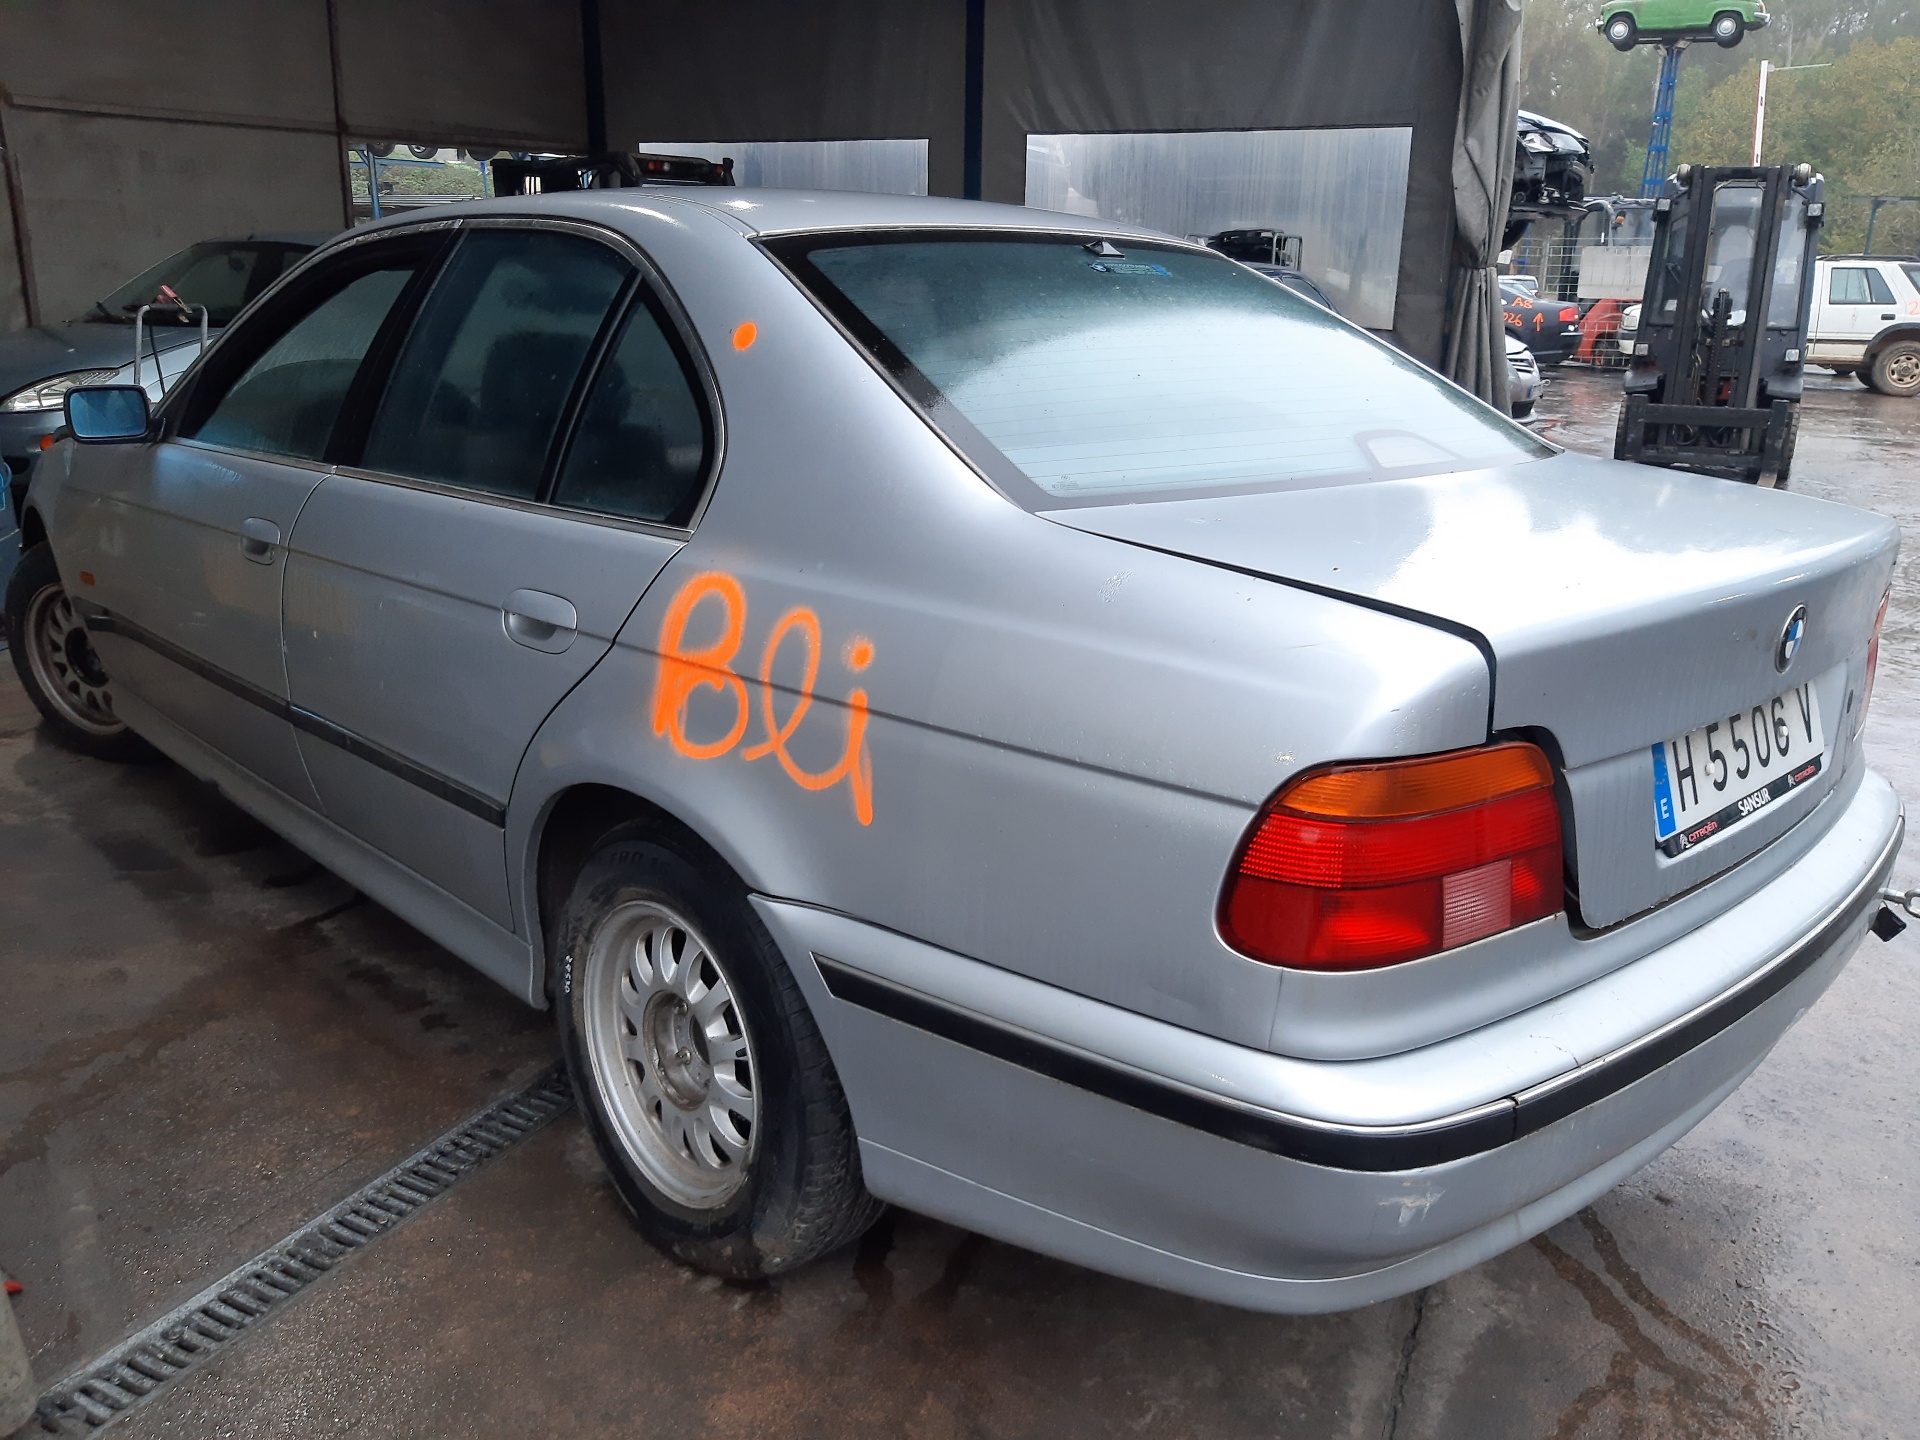 BMW 5 Series E39 (1995-2004) Бабина 1748017 22467469